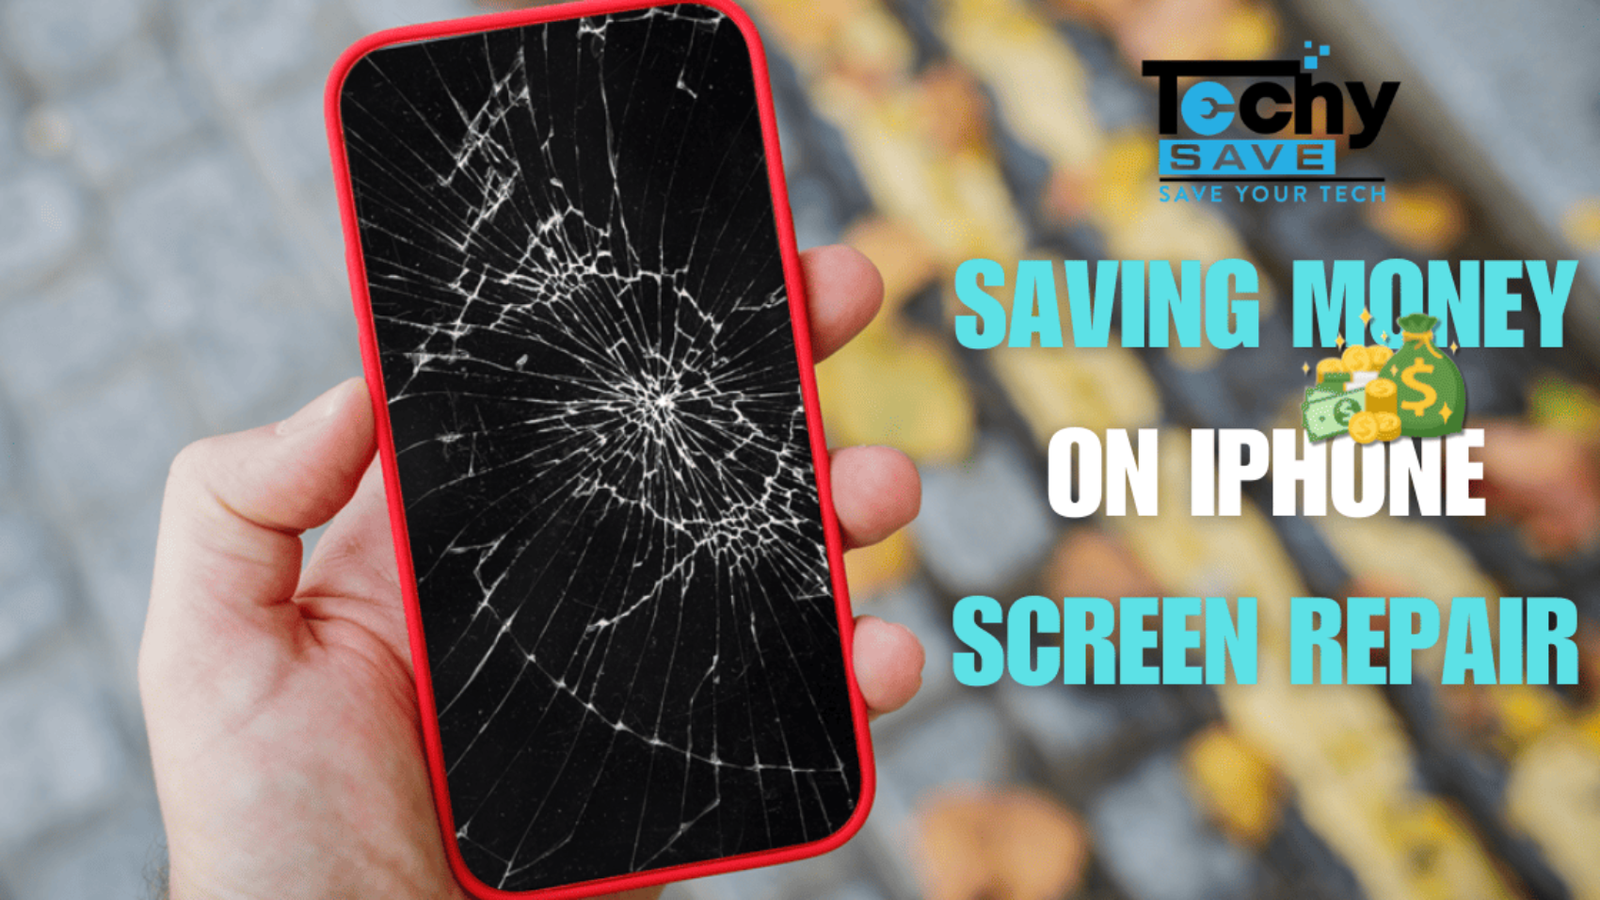 Saving Money on iPhone Screen Repair TechySave